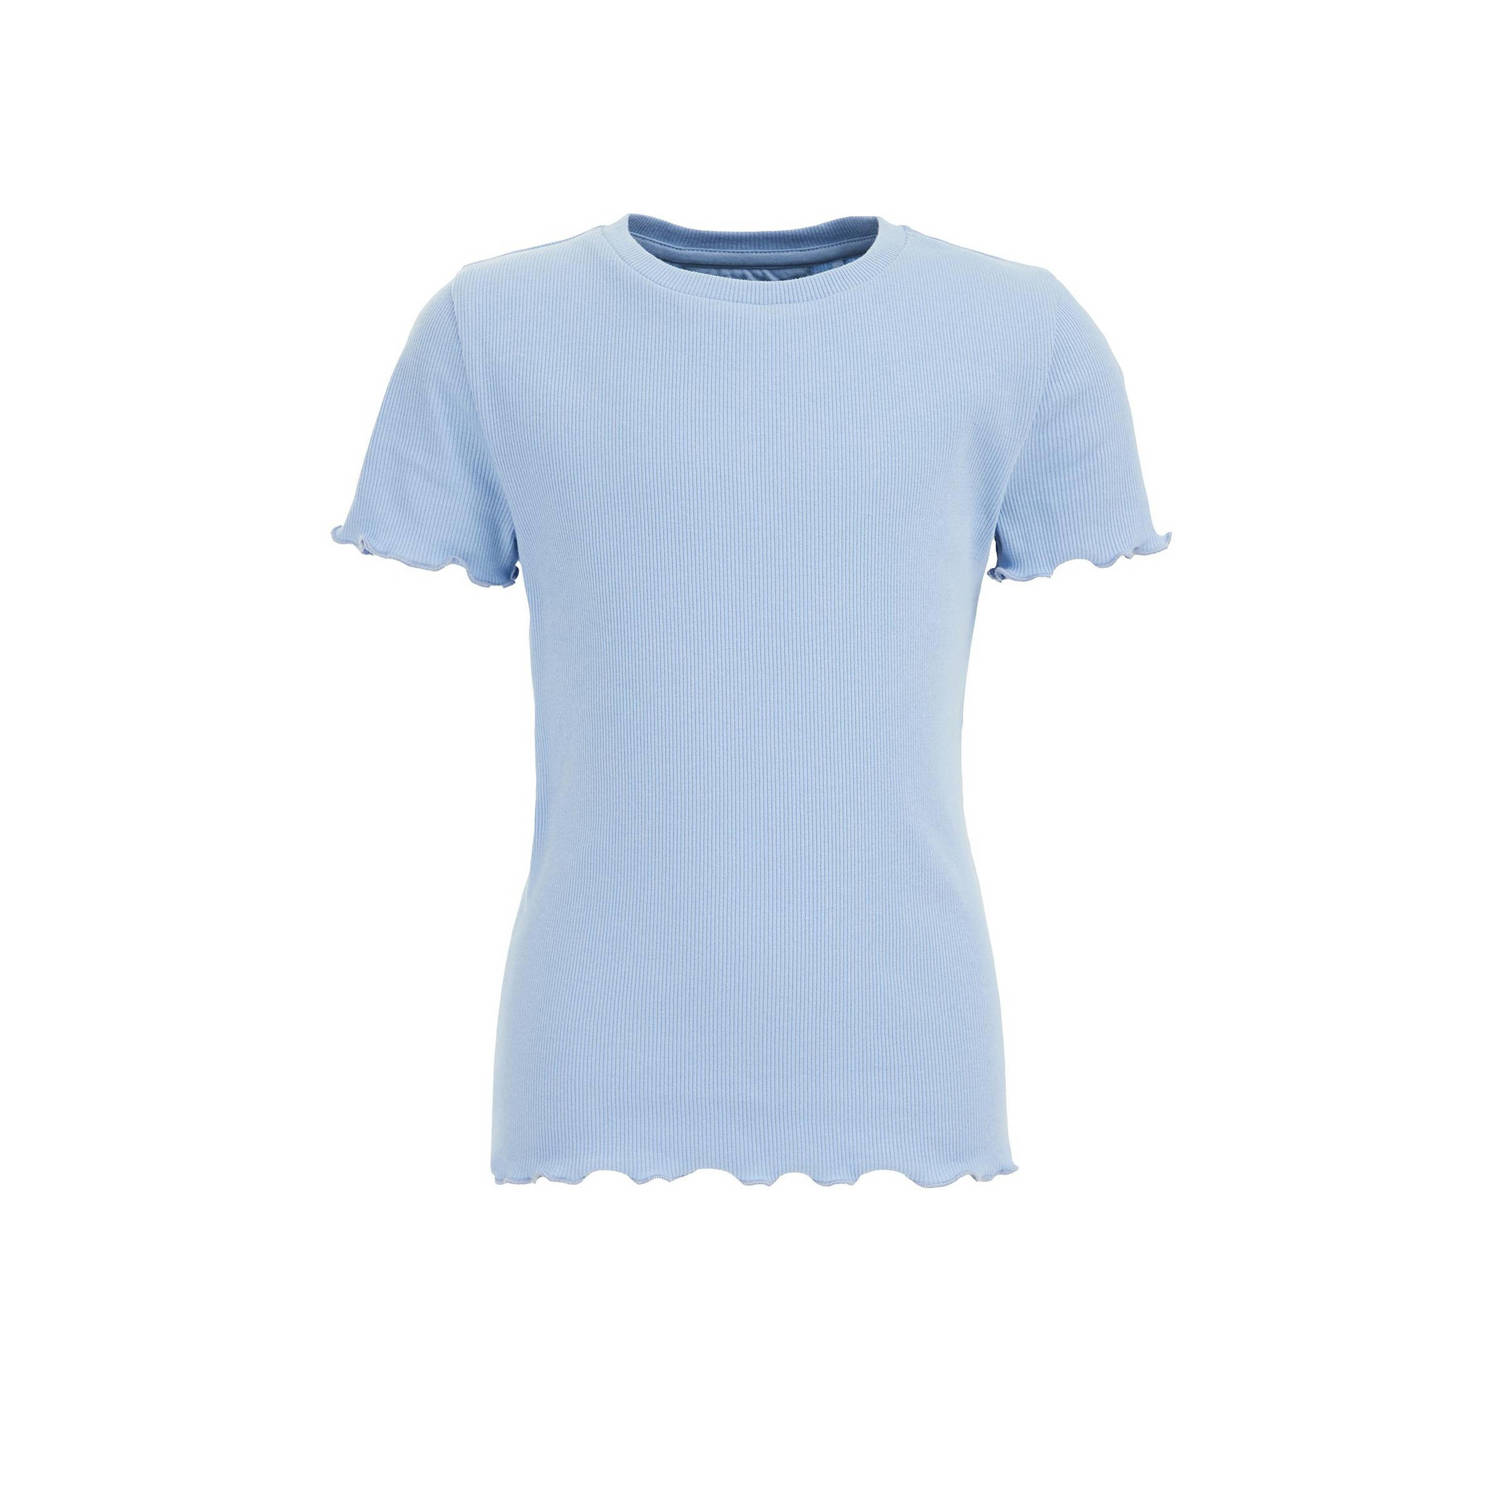 WE Fashion ribgebreid T-shirt nautical blue Blauw Meisjes Katoen Ronde hals 110 116